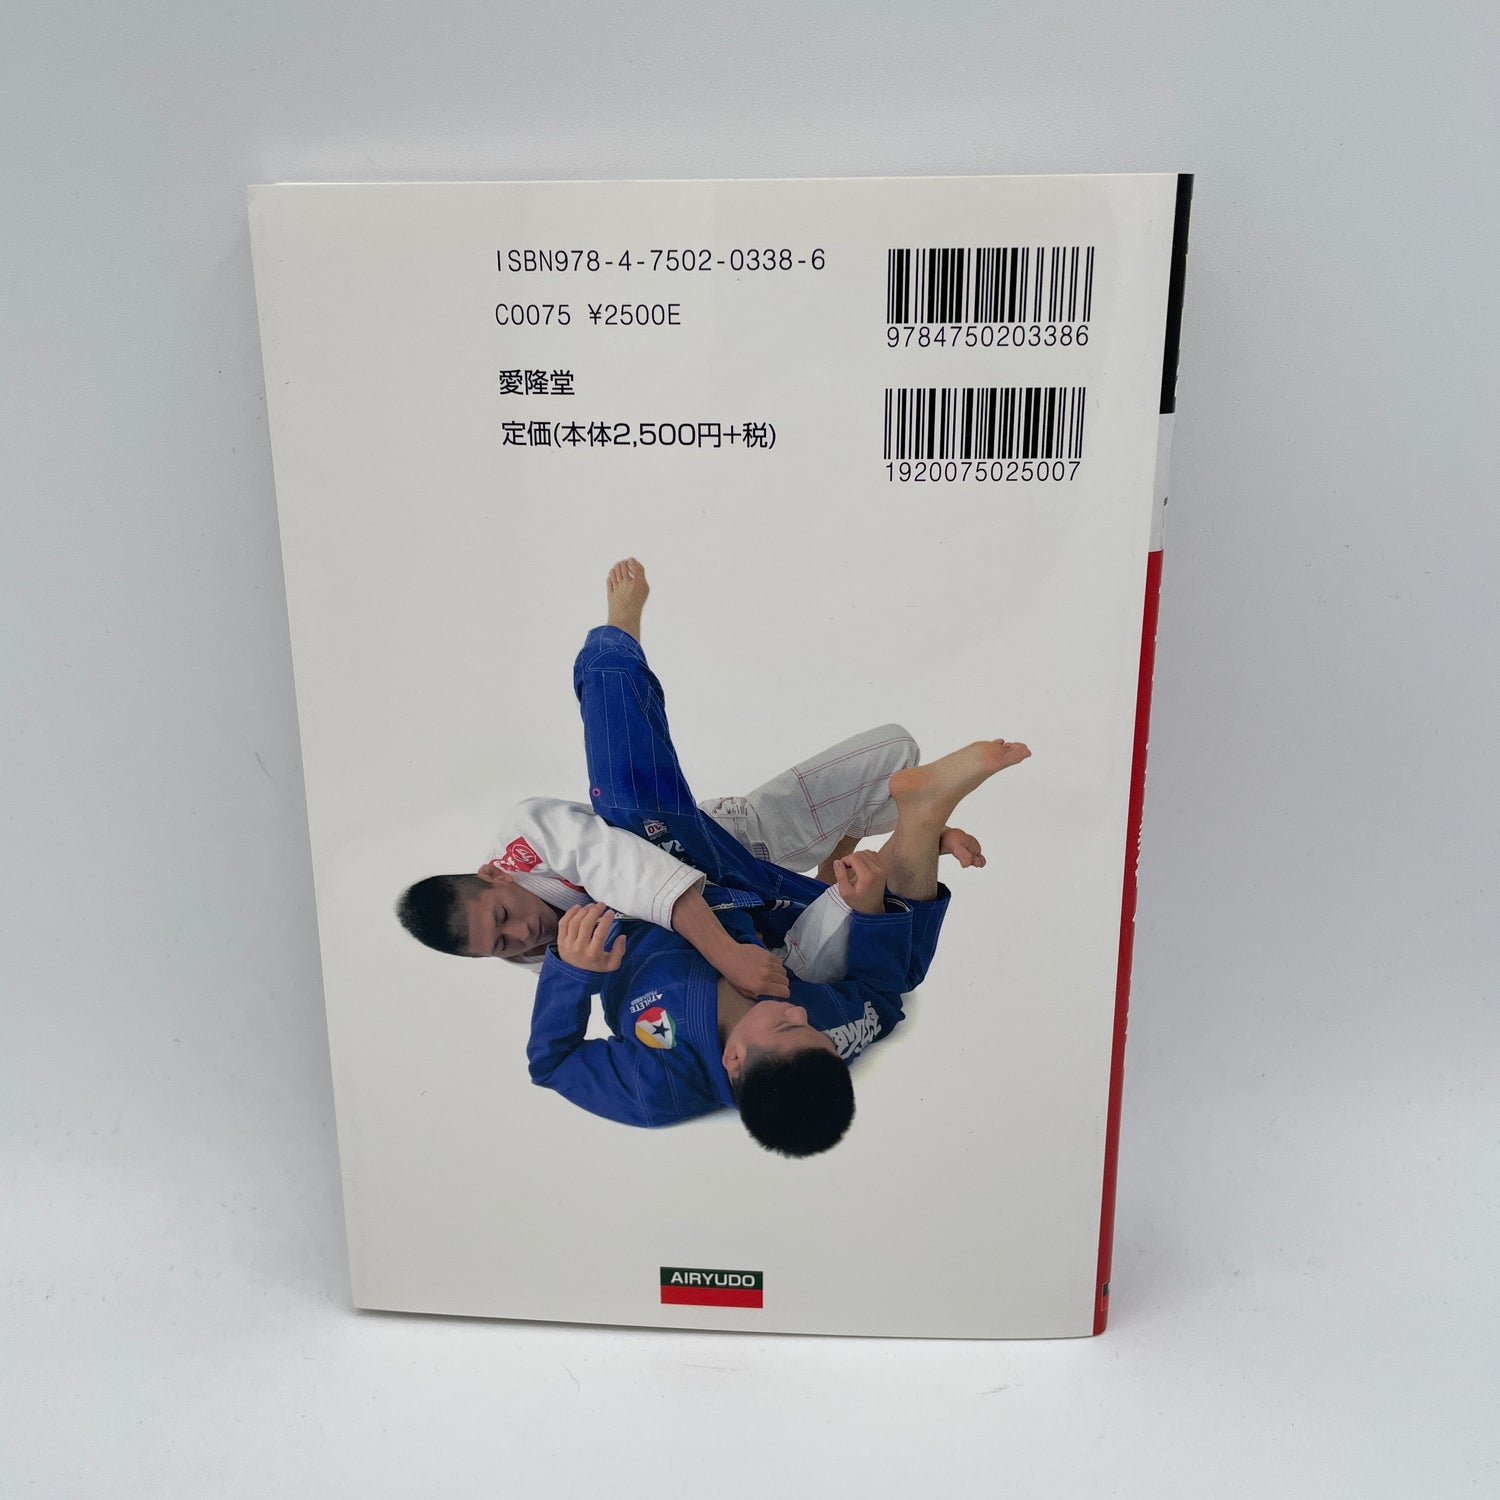 Juego de libro y 2 DVD de BJJ Berimbolo de Koji Shibamoto